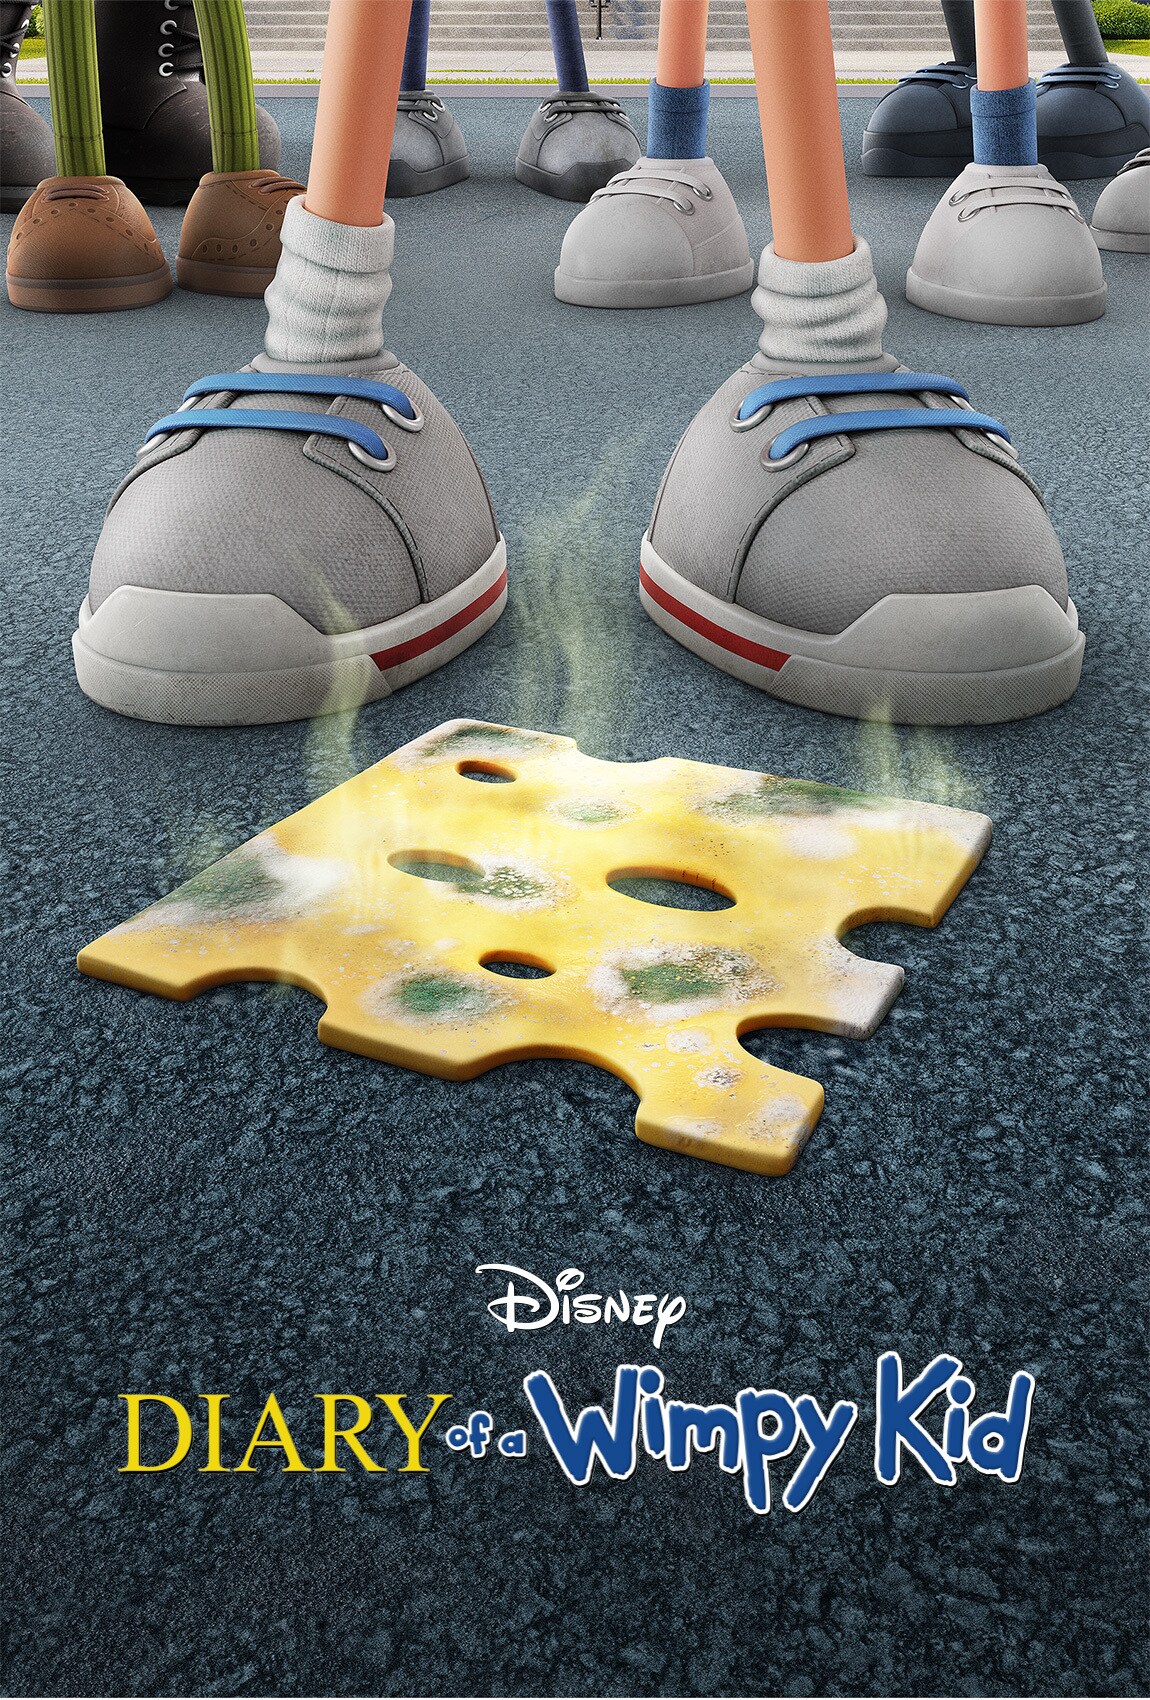 Diary of a Wimpy Kid on Disney Plus